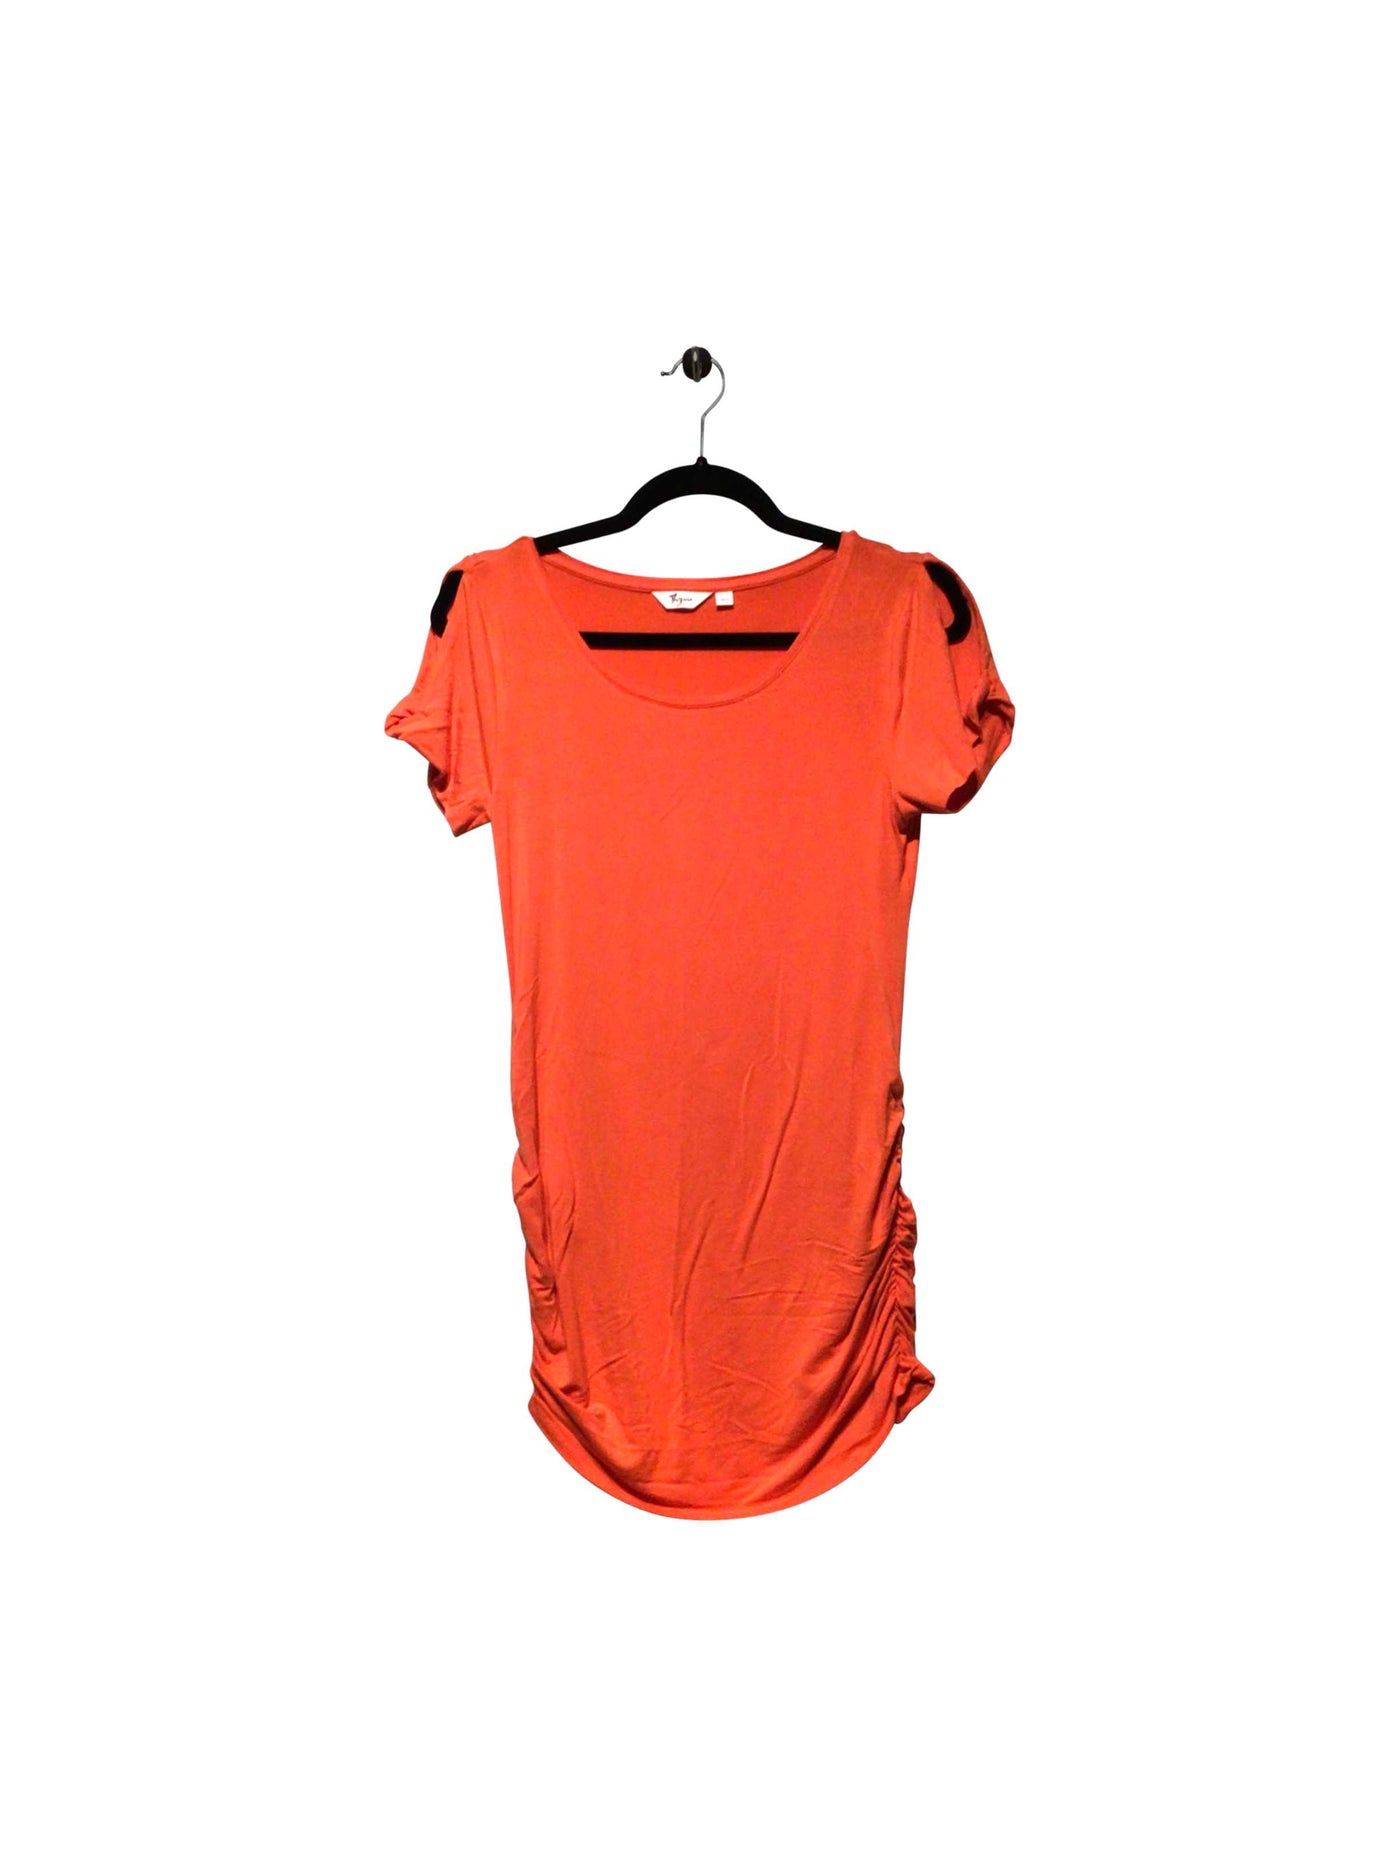 THYME MATERNITY Regular fit T-shirt in Orange  -  XS  12.99 Koop